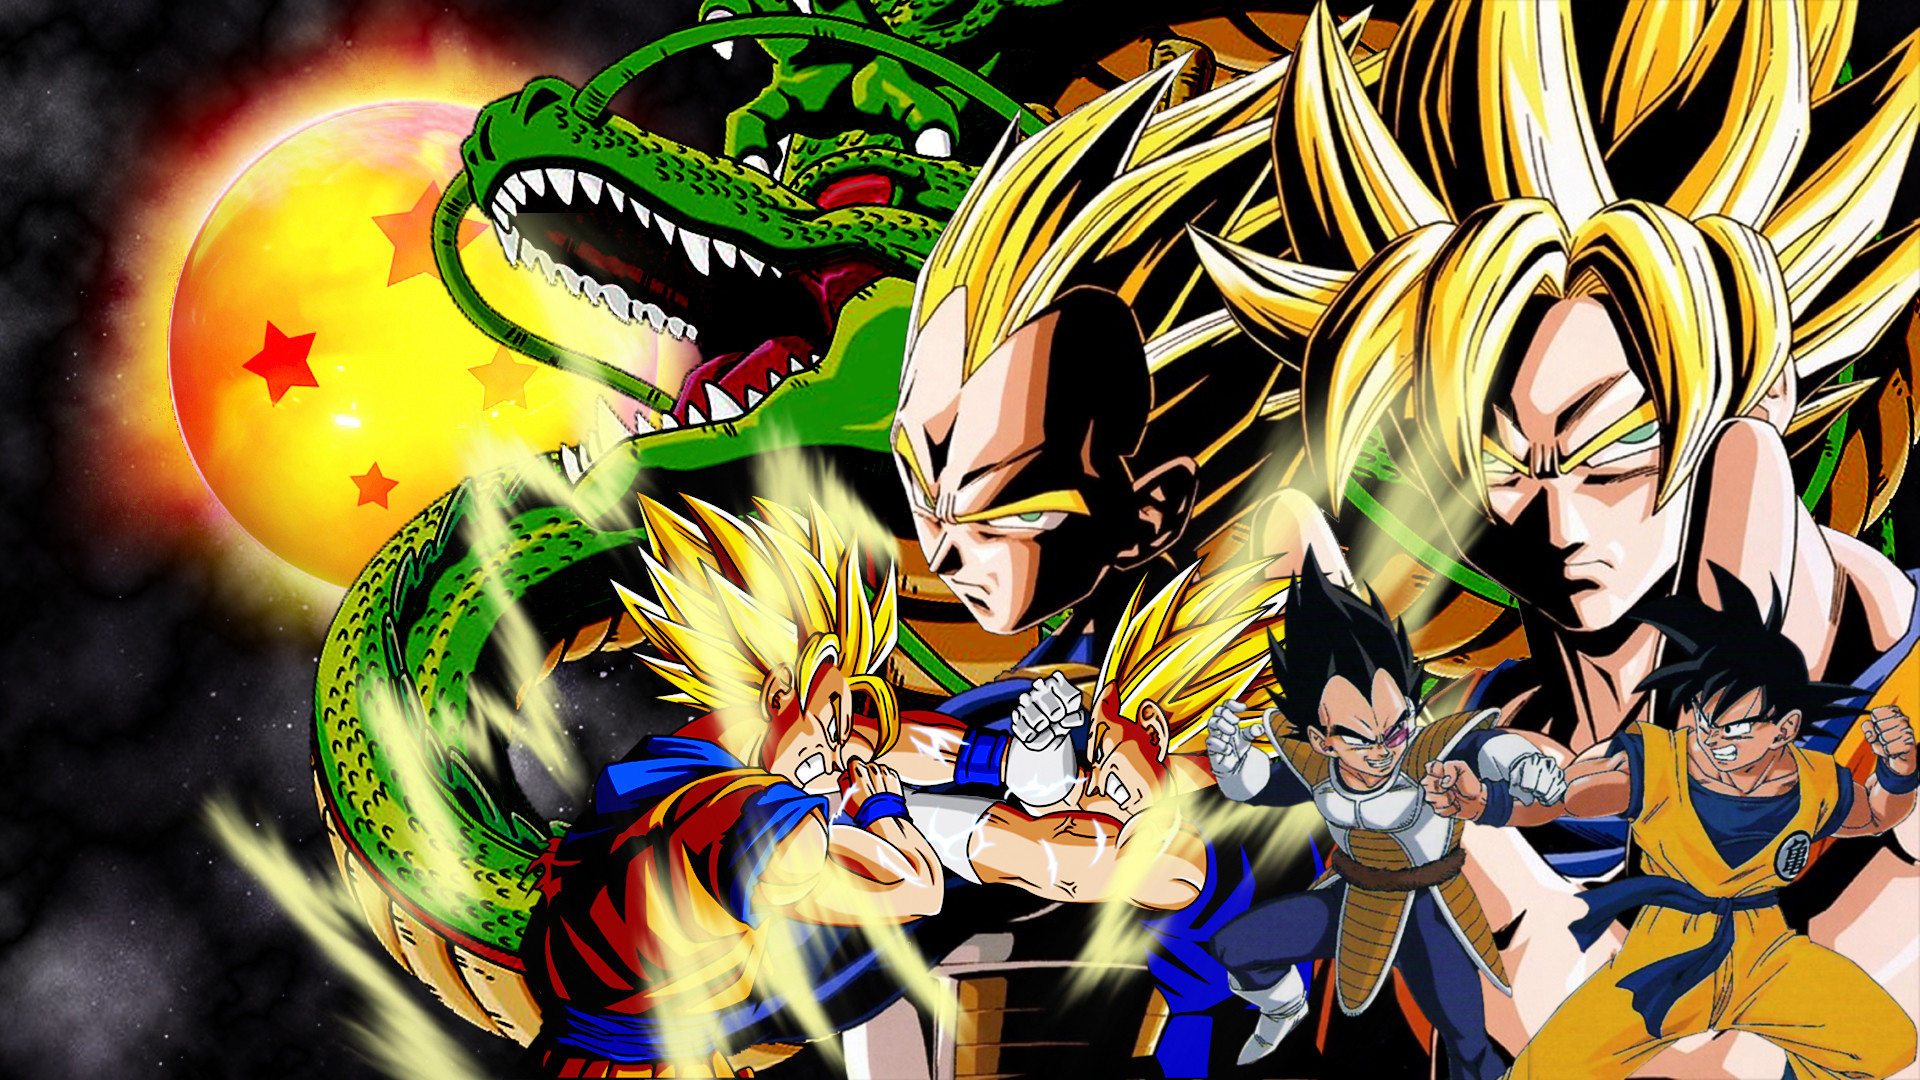 Goku vs vegeta wallpaper